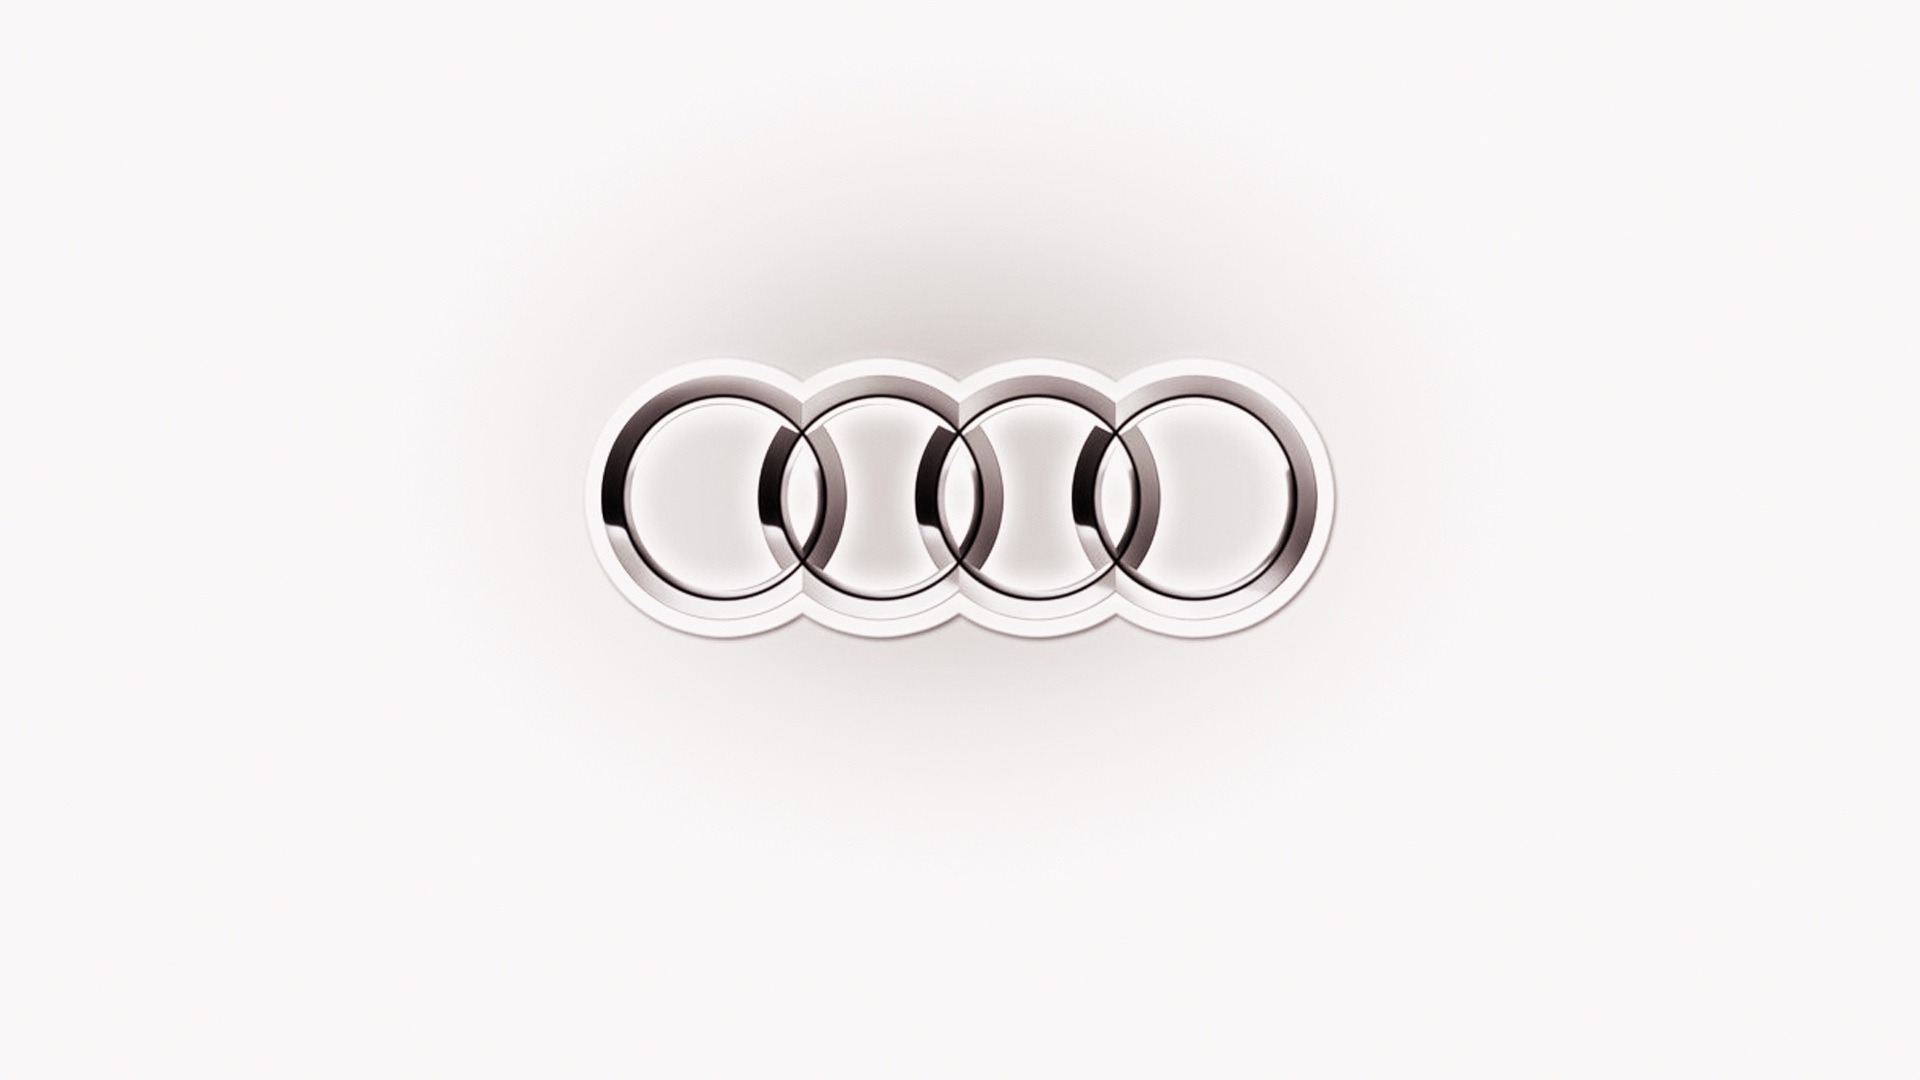 7 HD Audi Logo Wallpapers   HDWallSourcecom